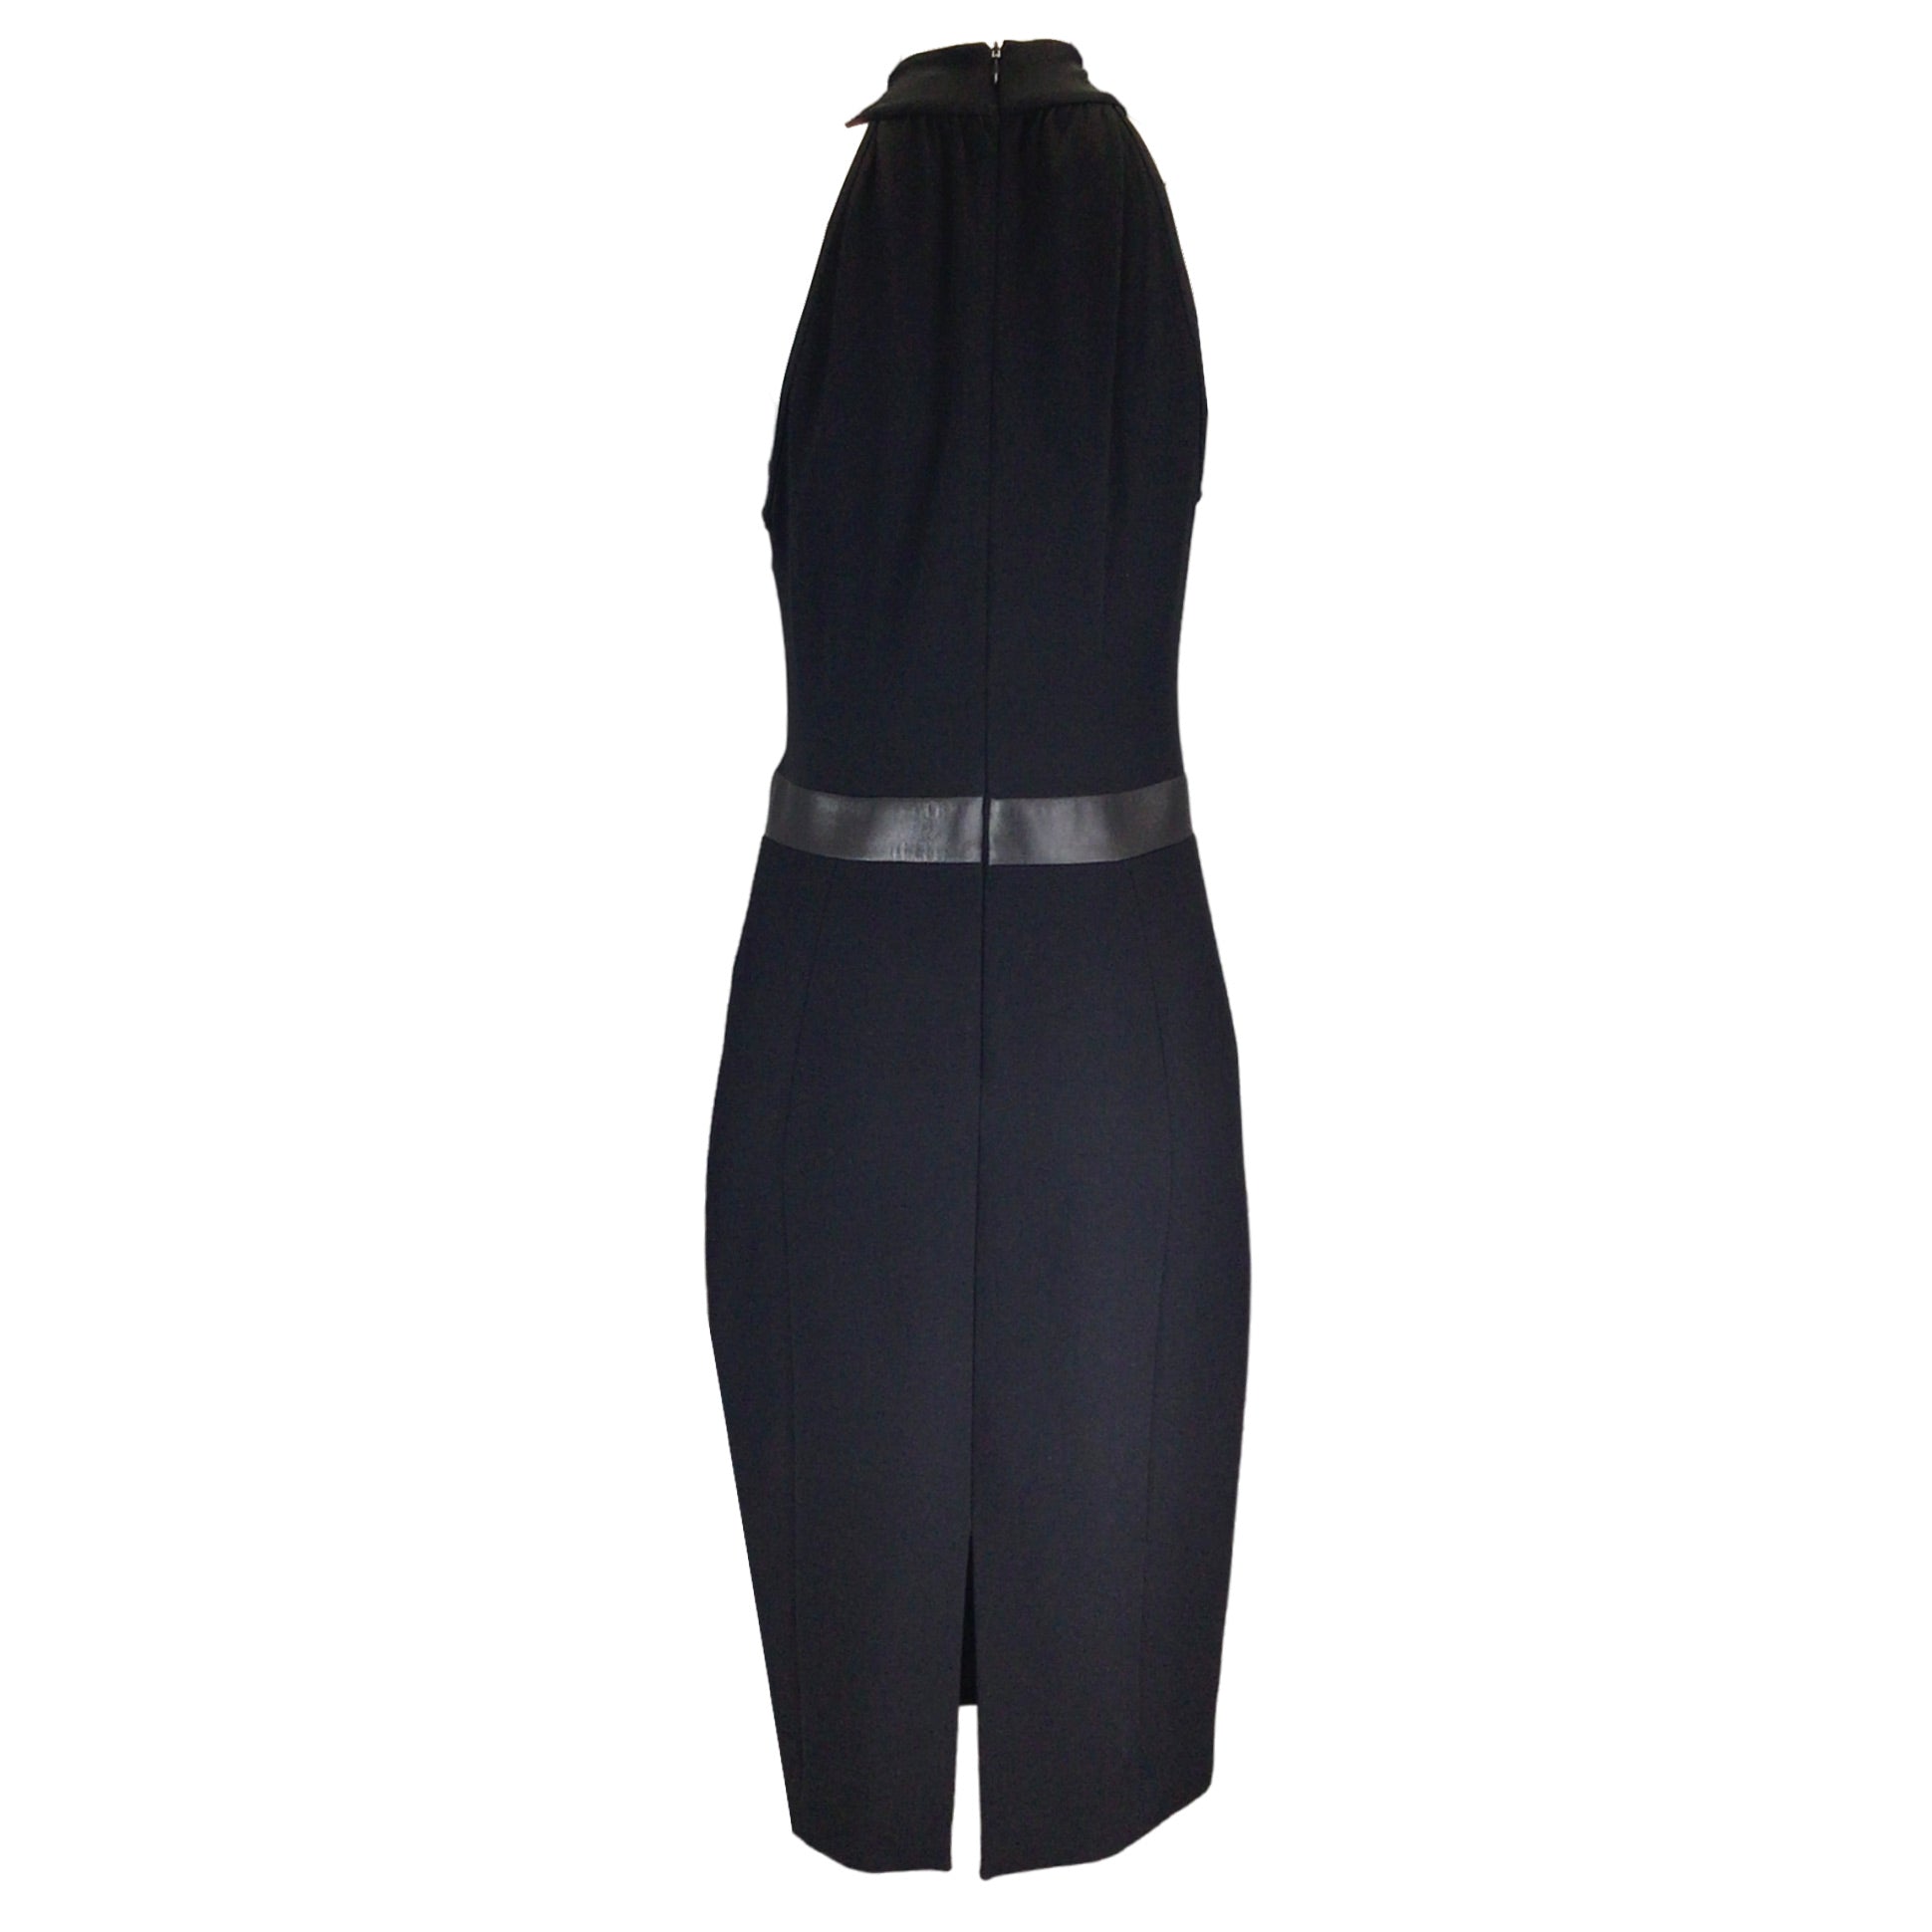 Michael Kors Collection Black Boucle Crepe Halter Dress